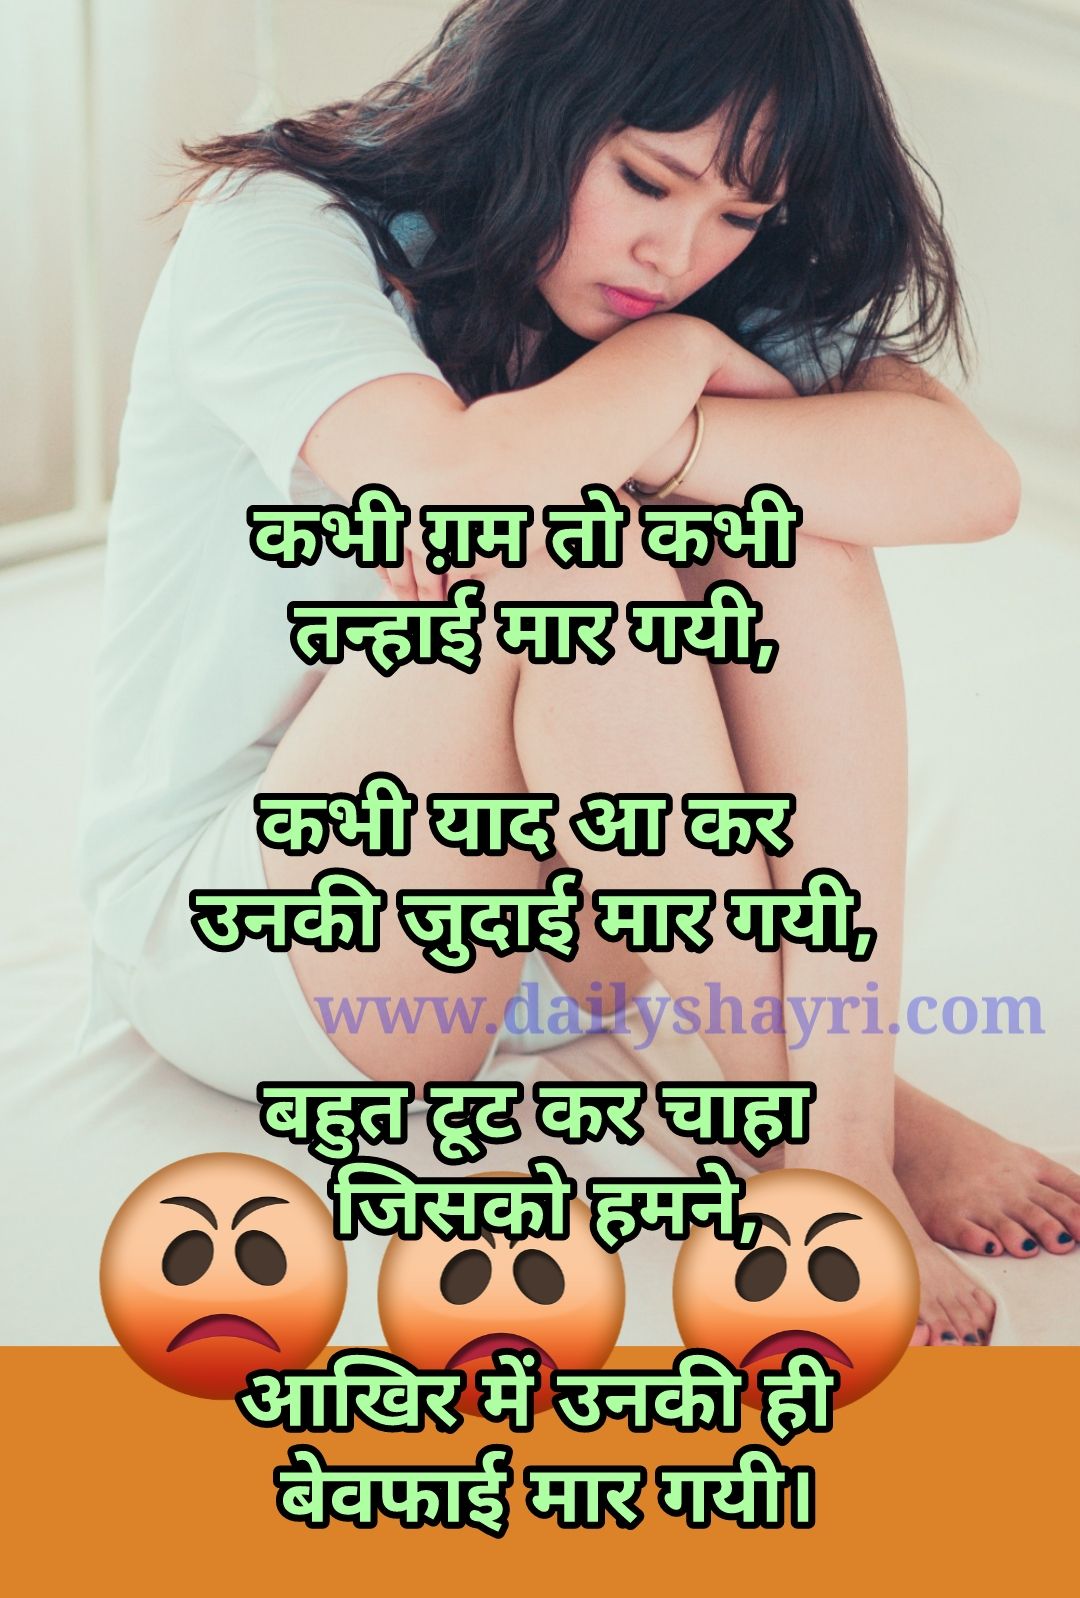 Bewafa Shayari In Hindi For Girlfriend - Dailyshayri.com - Hindi Shayari Love Shayari Love Quotes Hd Images